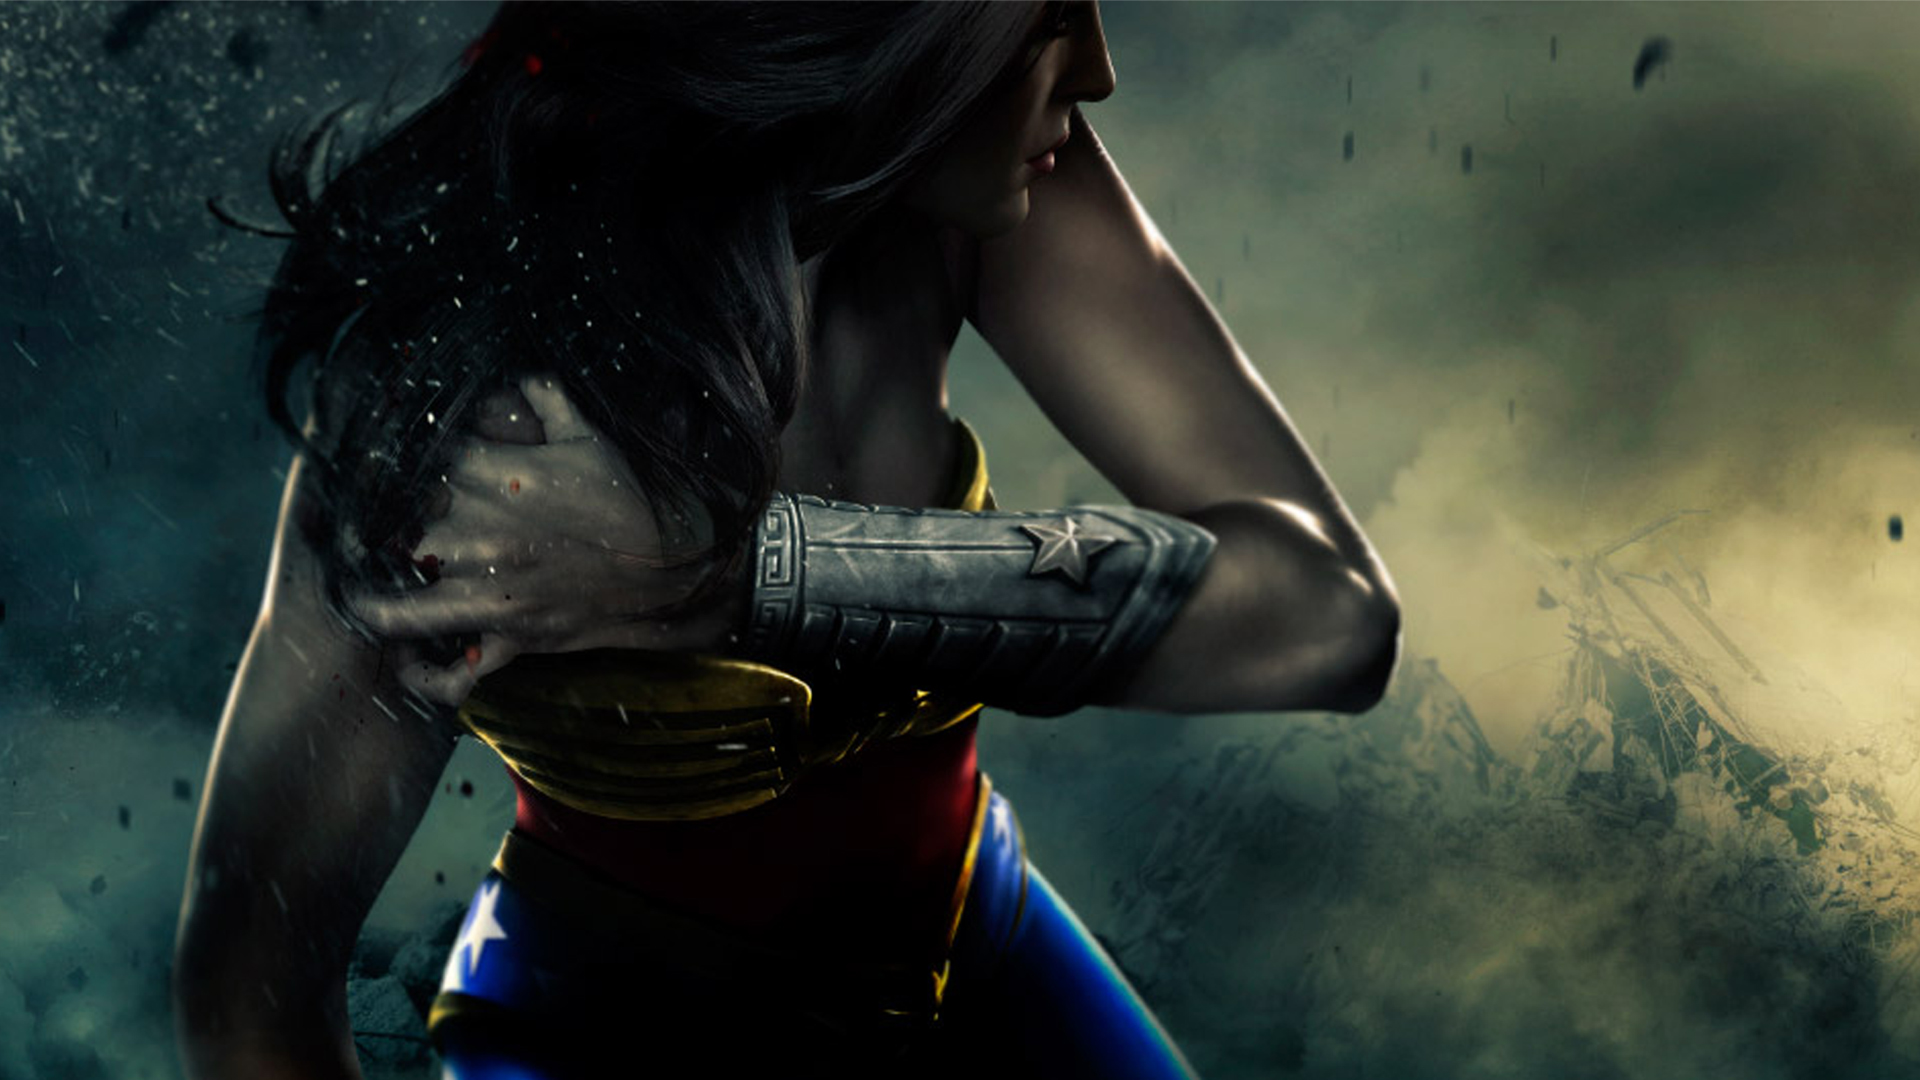 injustice: gods among us, video game, wonder woman, injustice